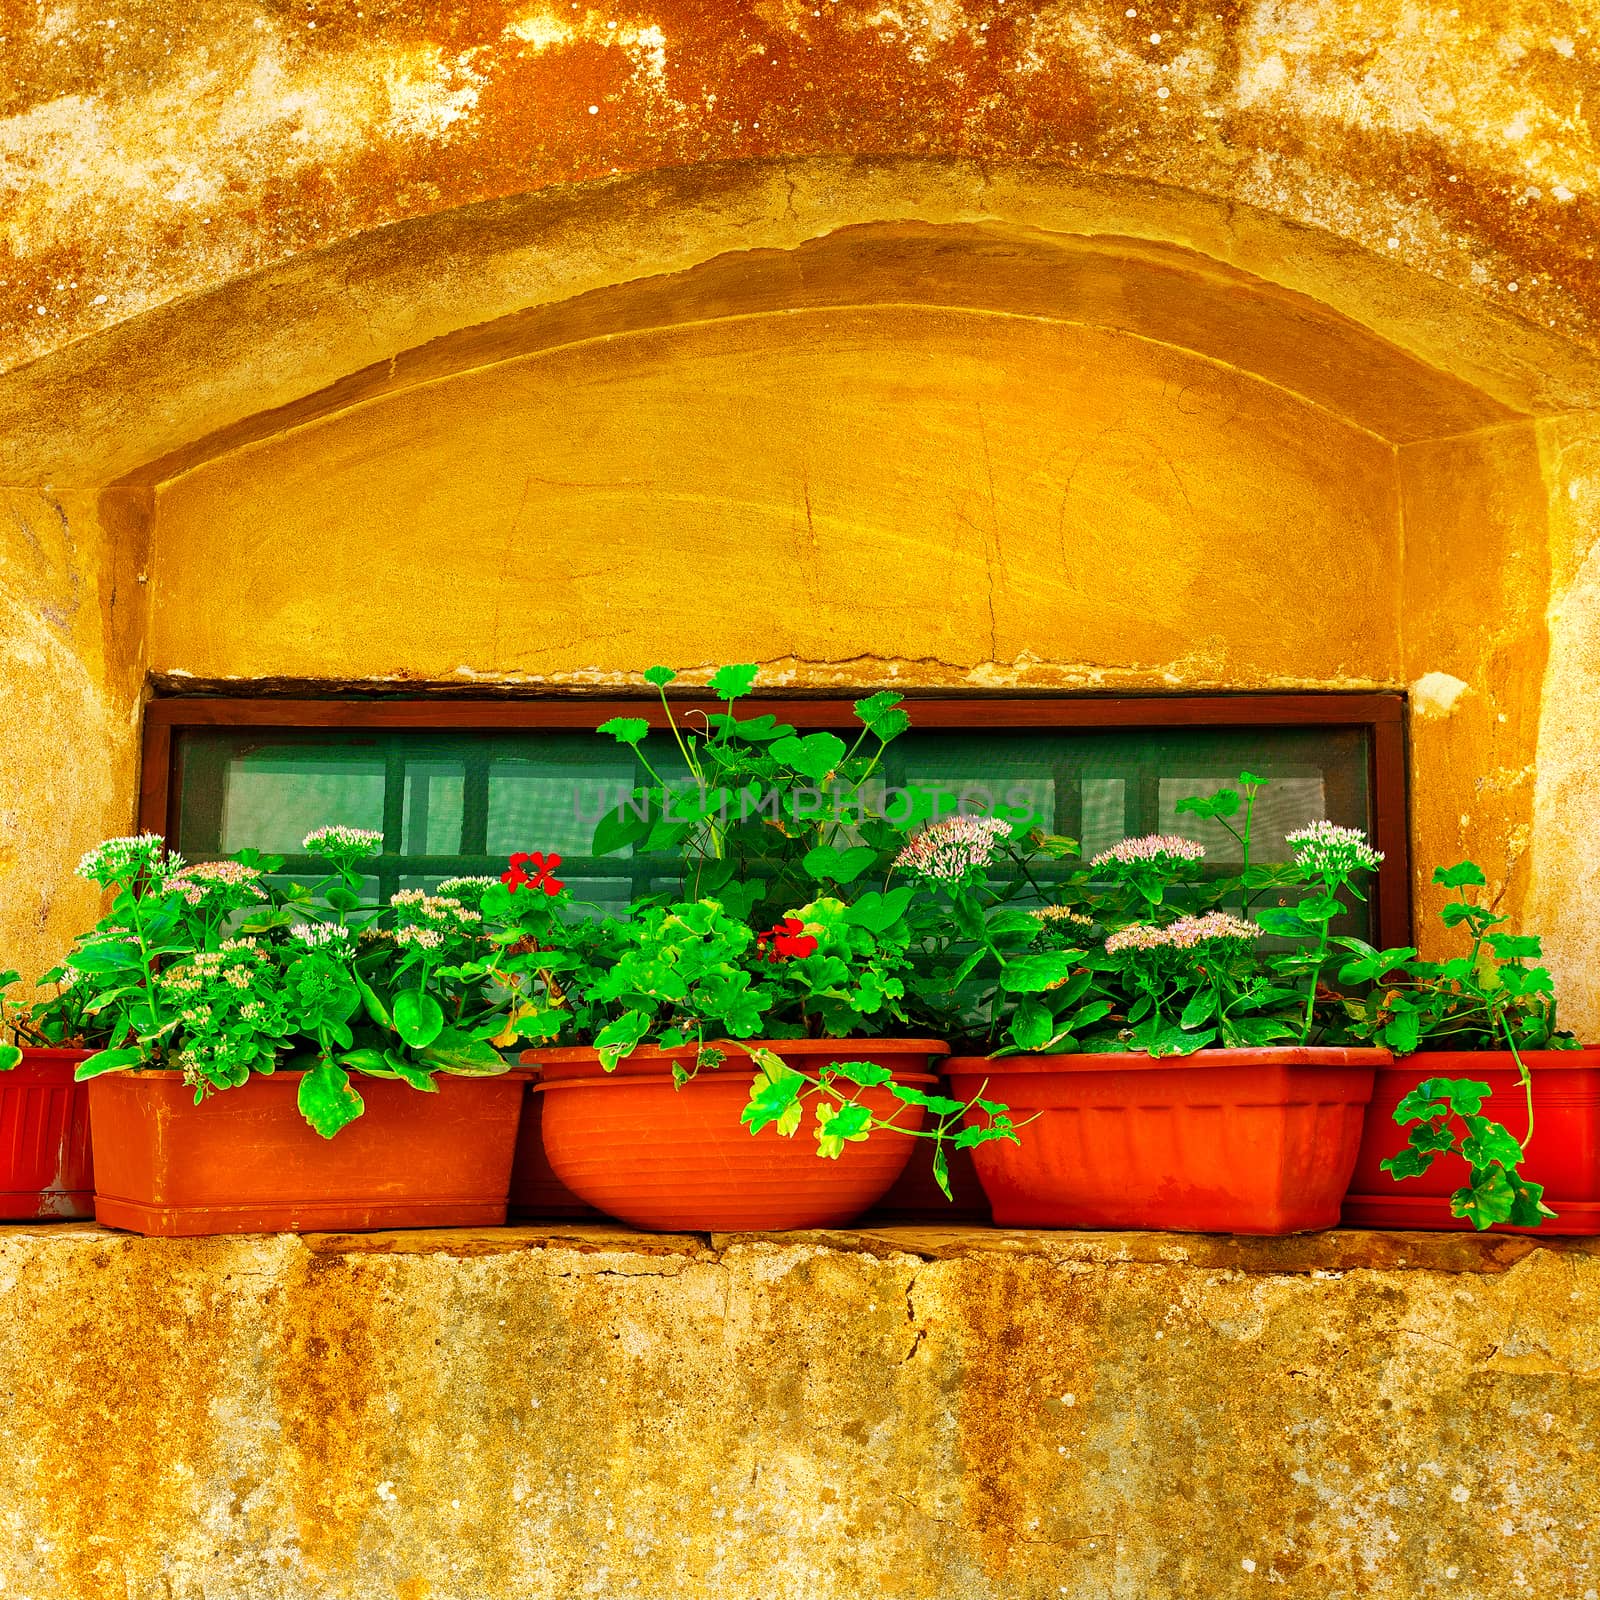 Italian Window Decorated with Fresh Flowers, Instagram Effect